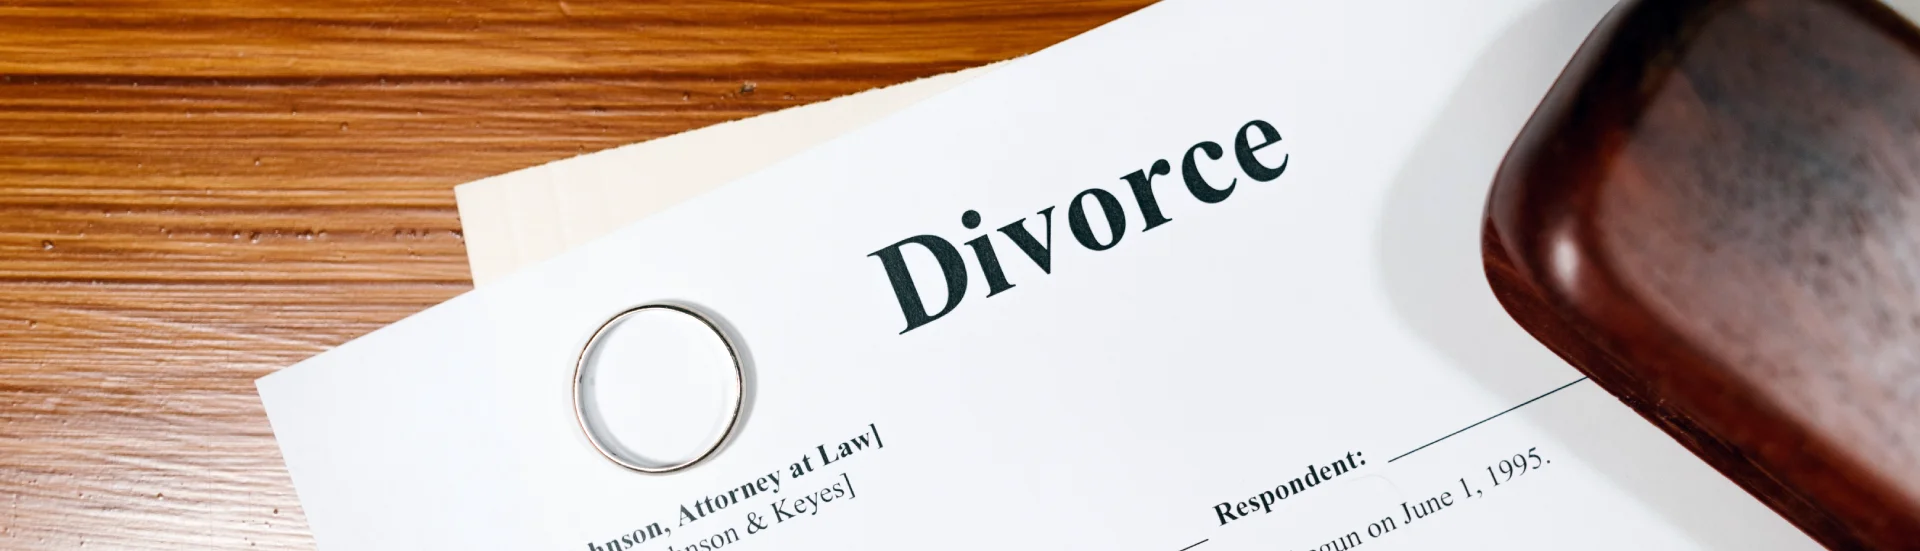 divorce family law